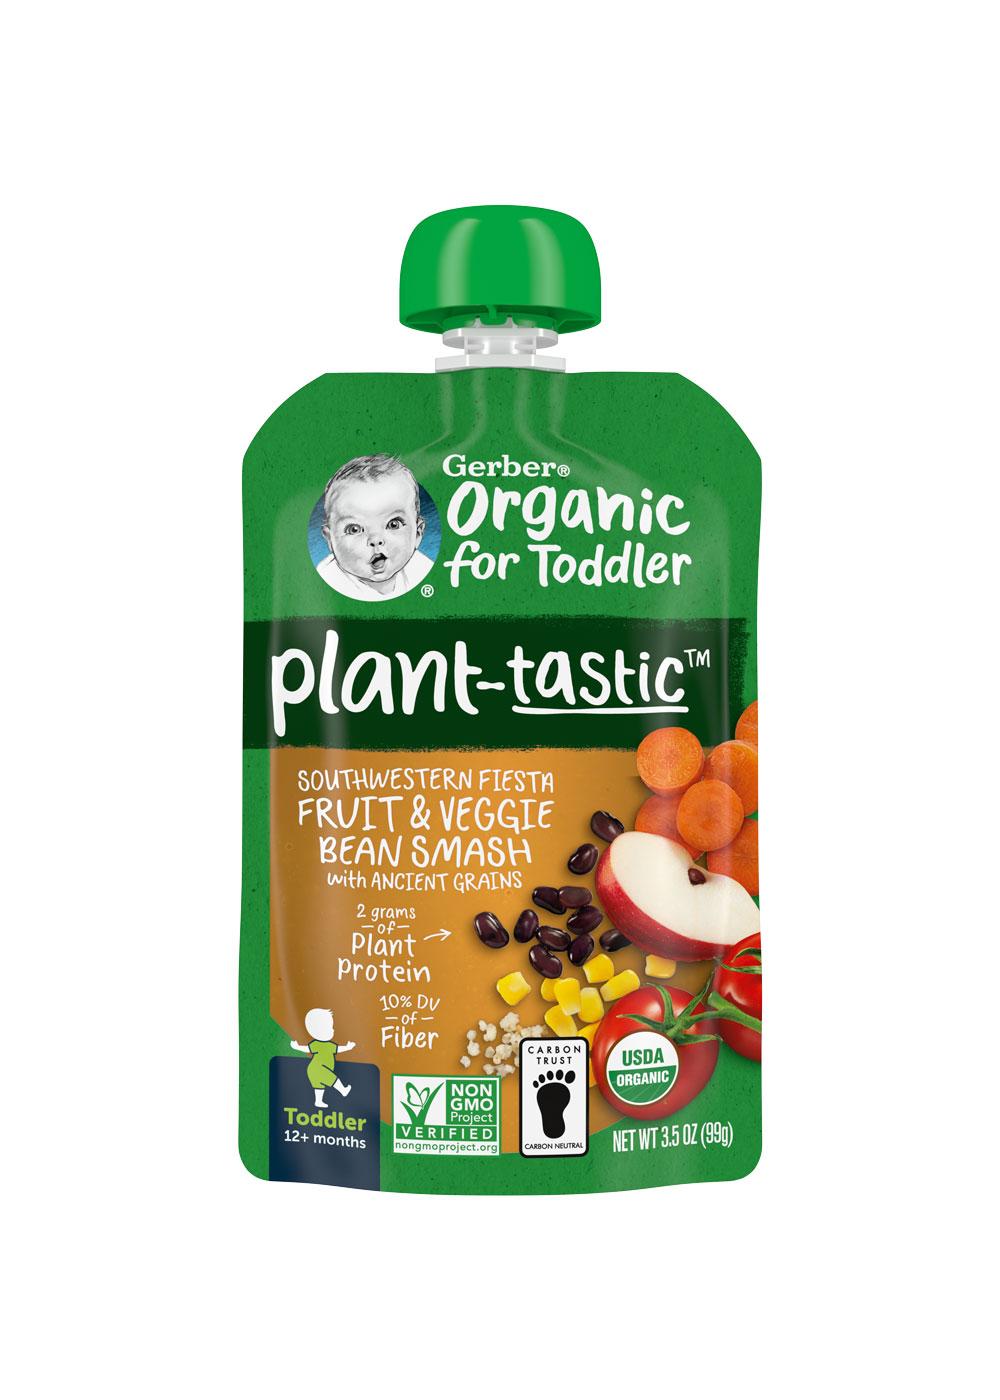 Gerber Organic for Toddler Plant-tastic Pouch - Southwestern Fiesta Fruit & Veggie Bean Smash; image 1 of 2